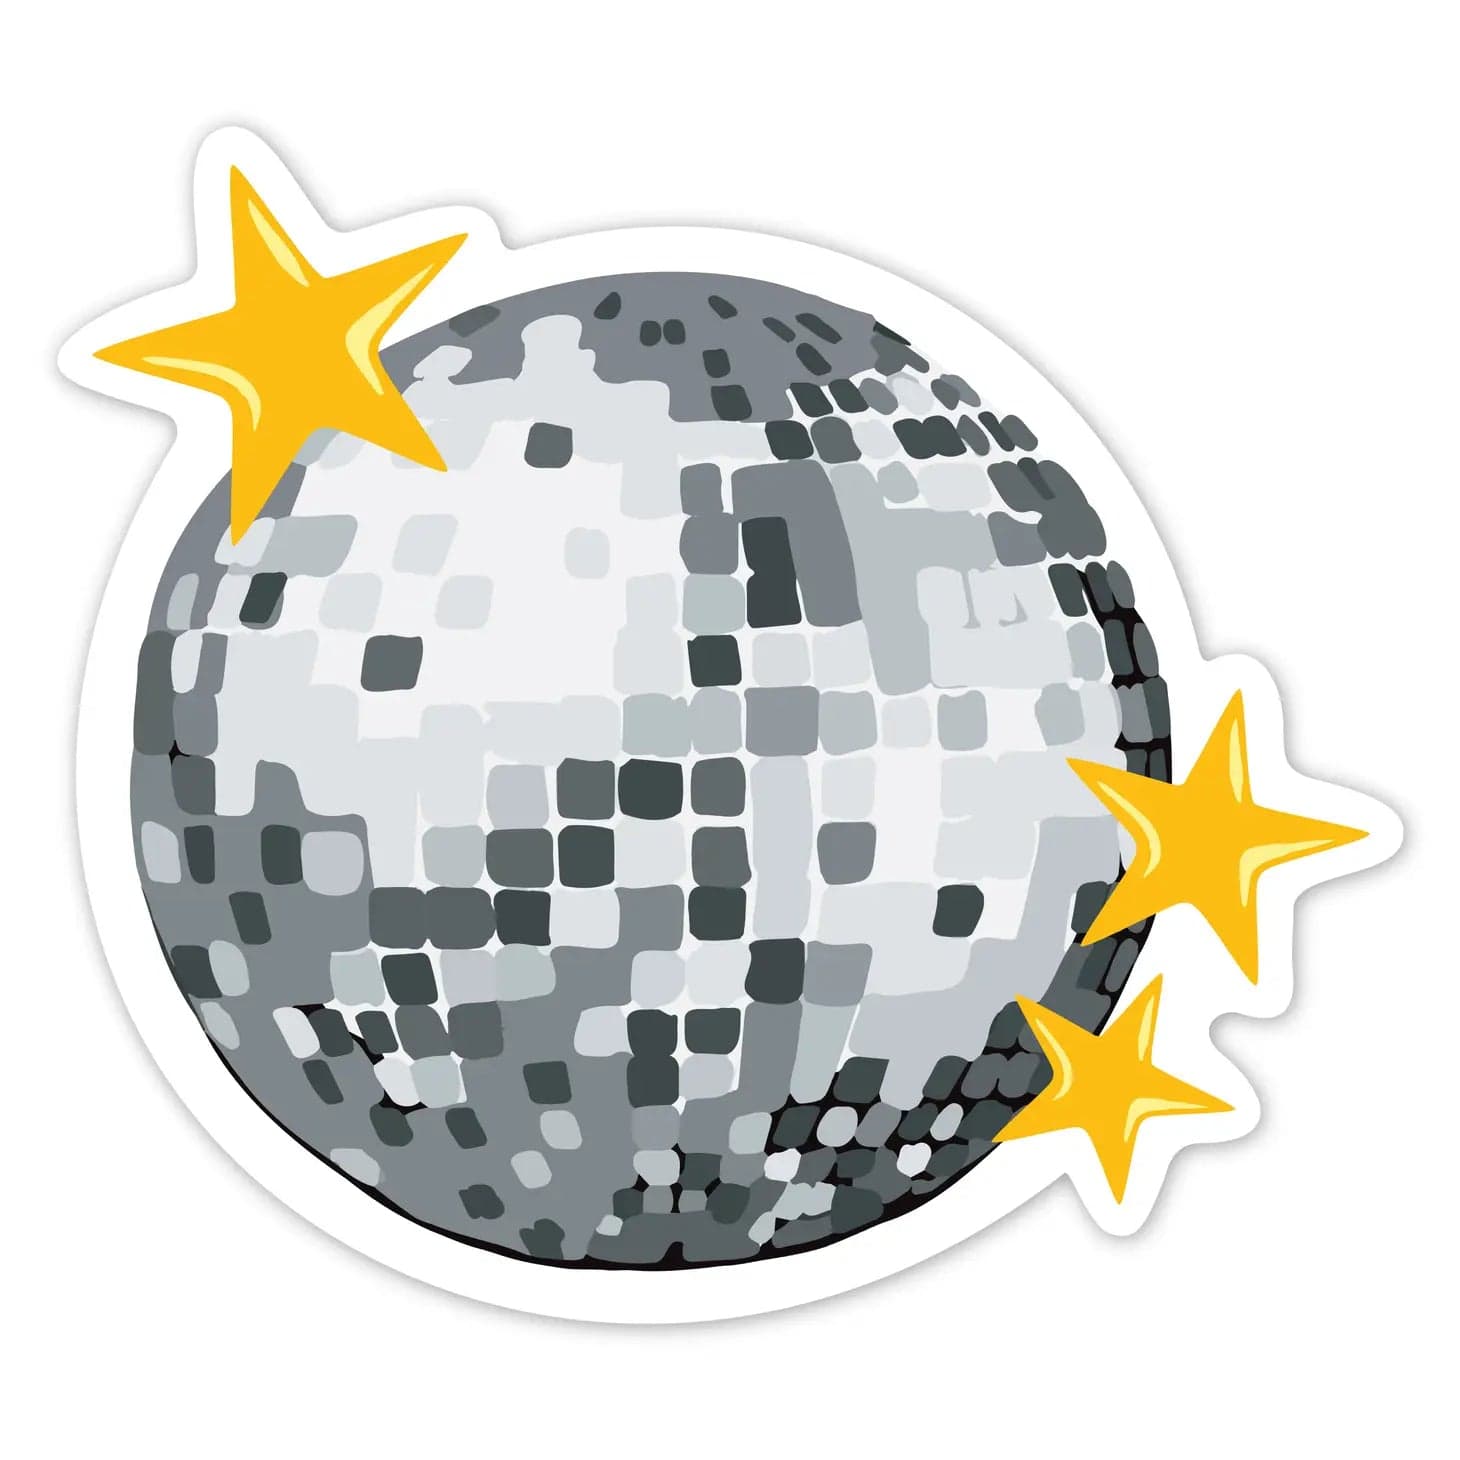 Disco Ball 70's Icon Sticker